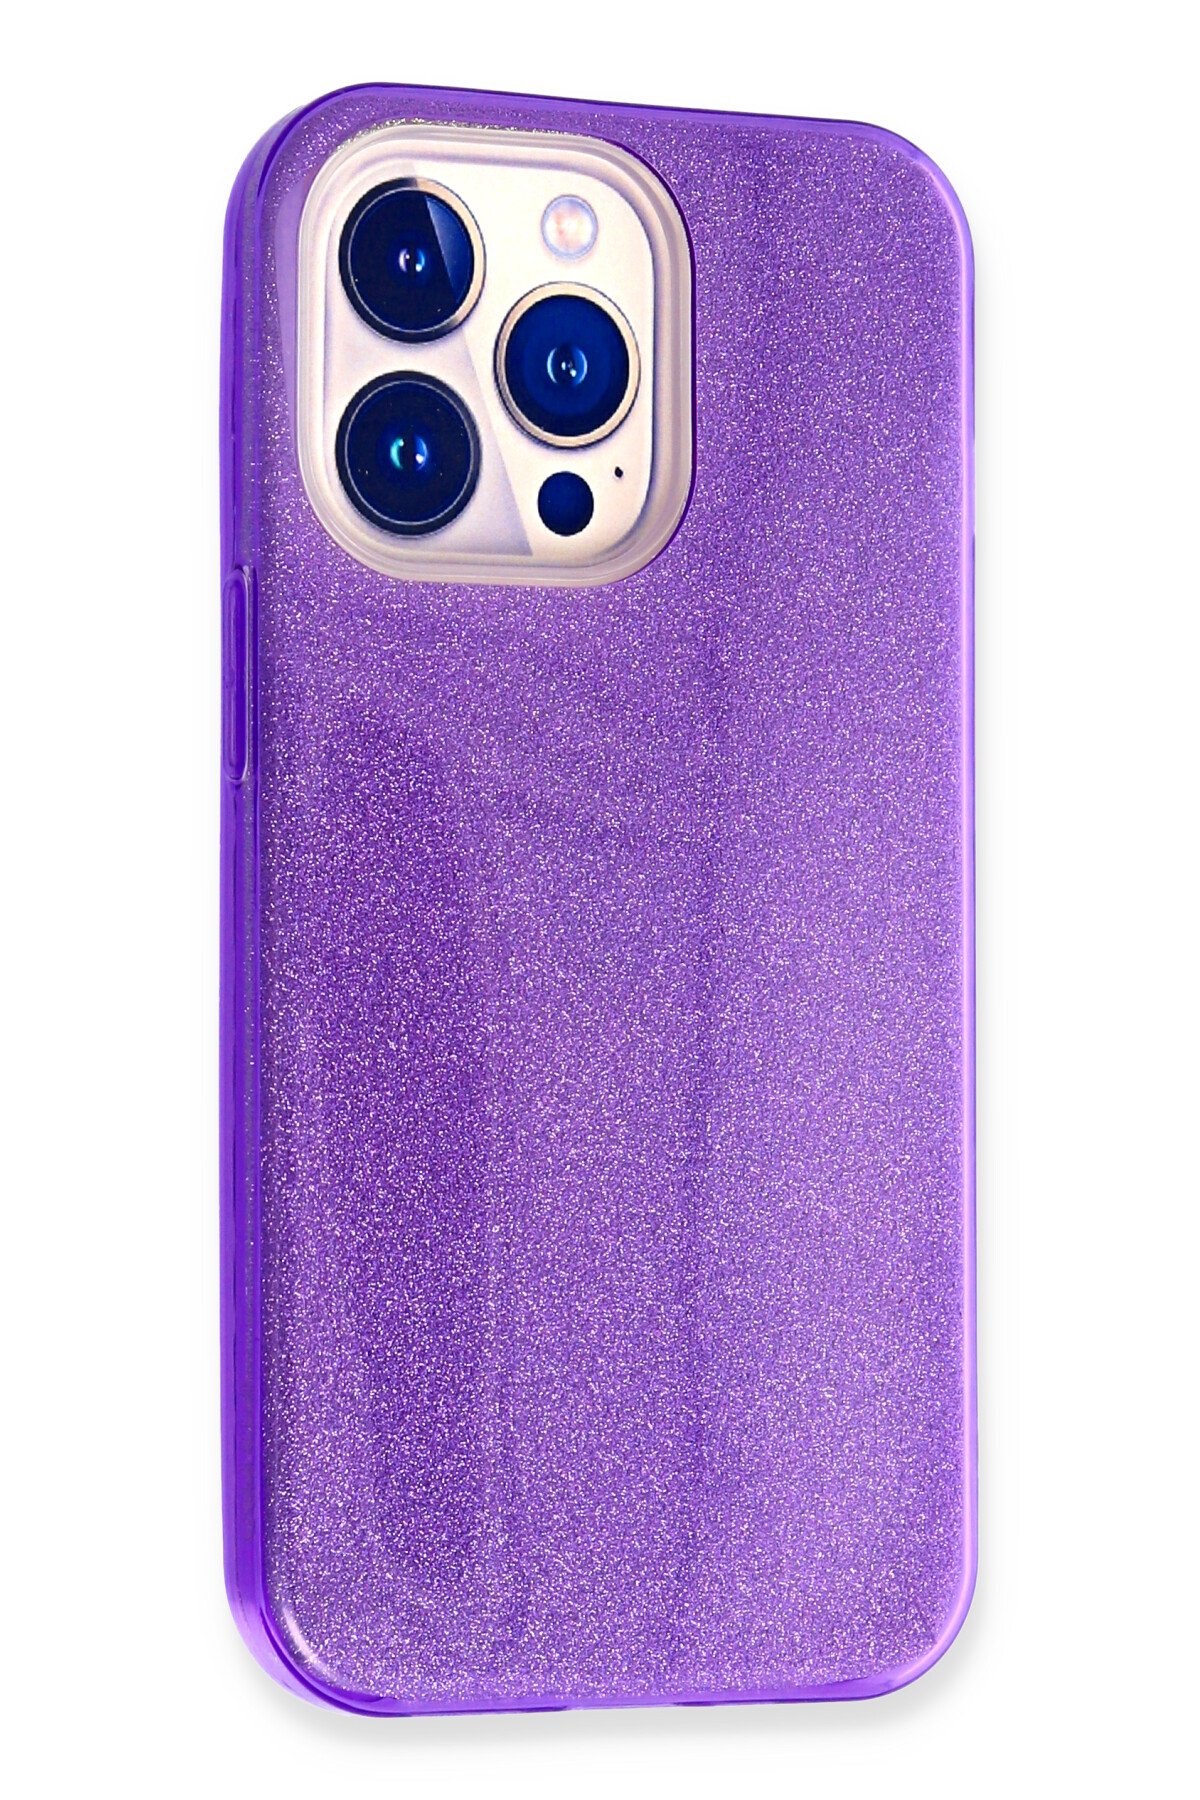 Newface iPhone 13 Pro Max Kılıf Lansman Legant Silikon - Açık Mavi